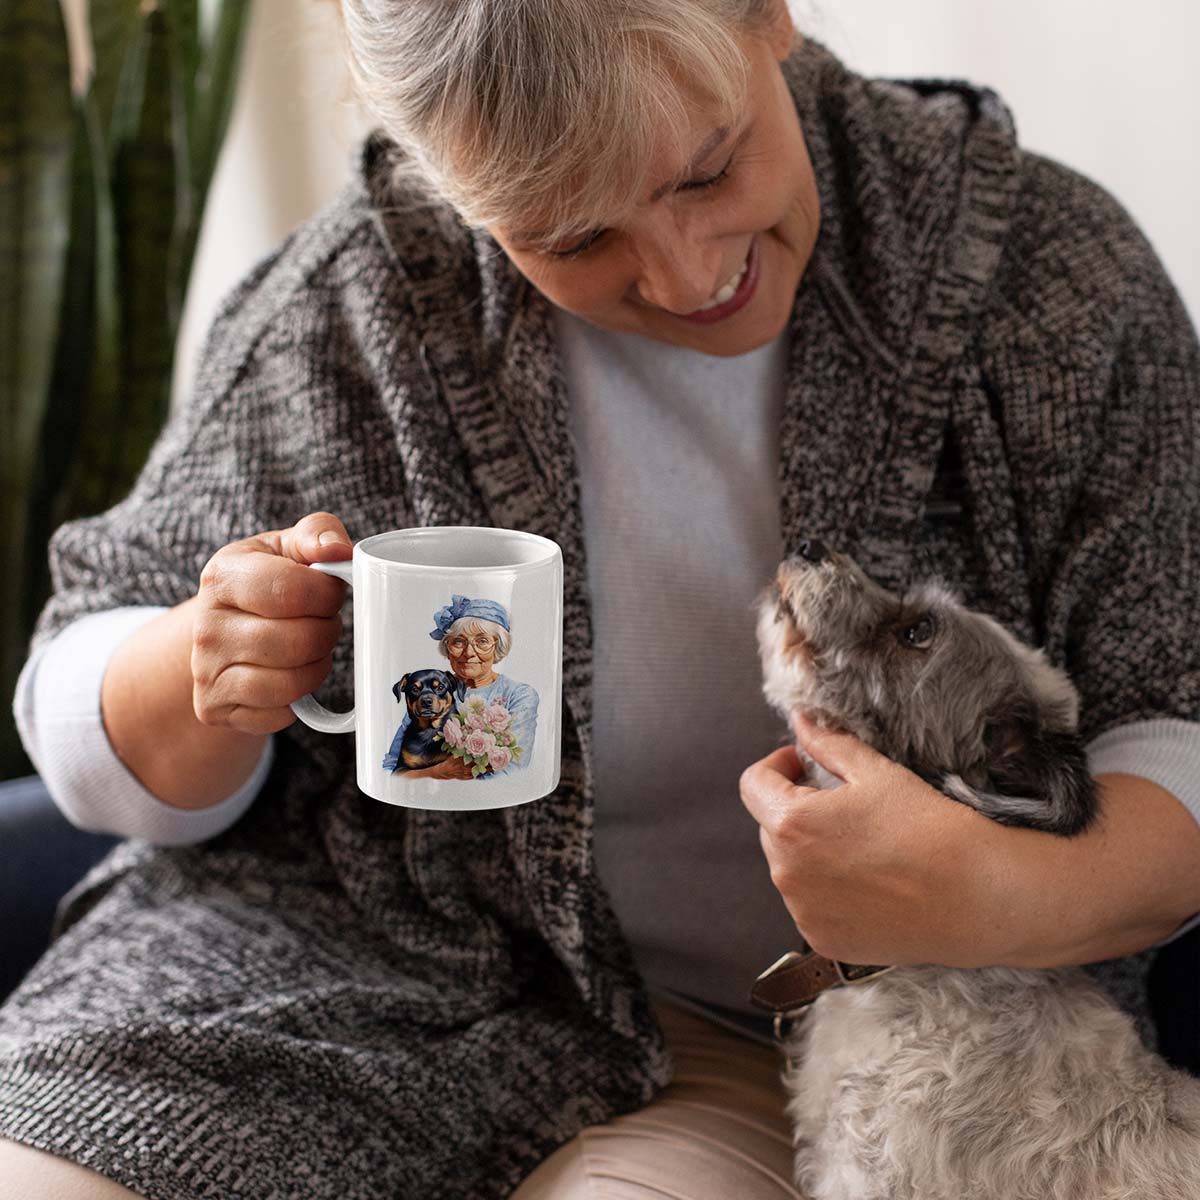 Custom Dog Mom Mug, Grandma and Rottweiler Love Ceramic Mug, Dog Owner Gift, Dog Lover Mug, Gift For Dog Mom, Gift For Dog Owner, Dog Coffee Mugs, Dog Grandma Coffee Mug, Mother's Day Gift